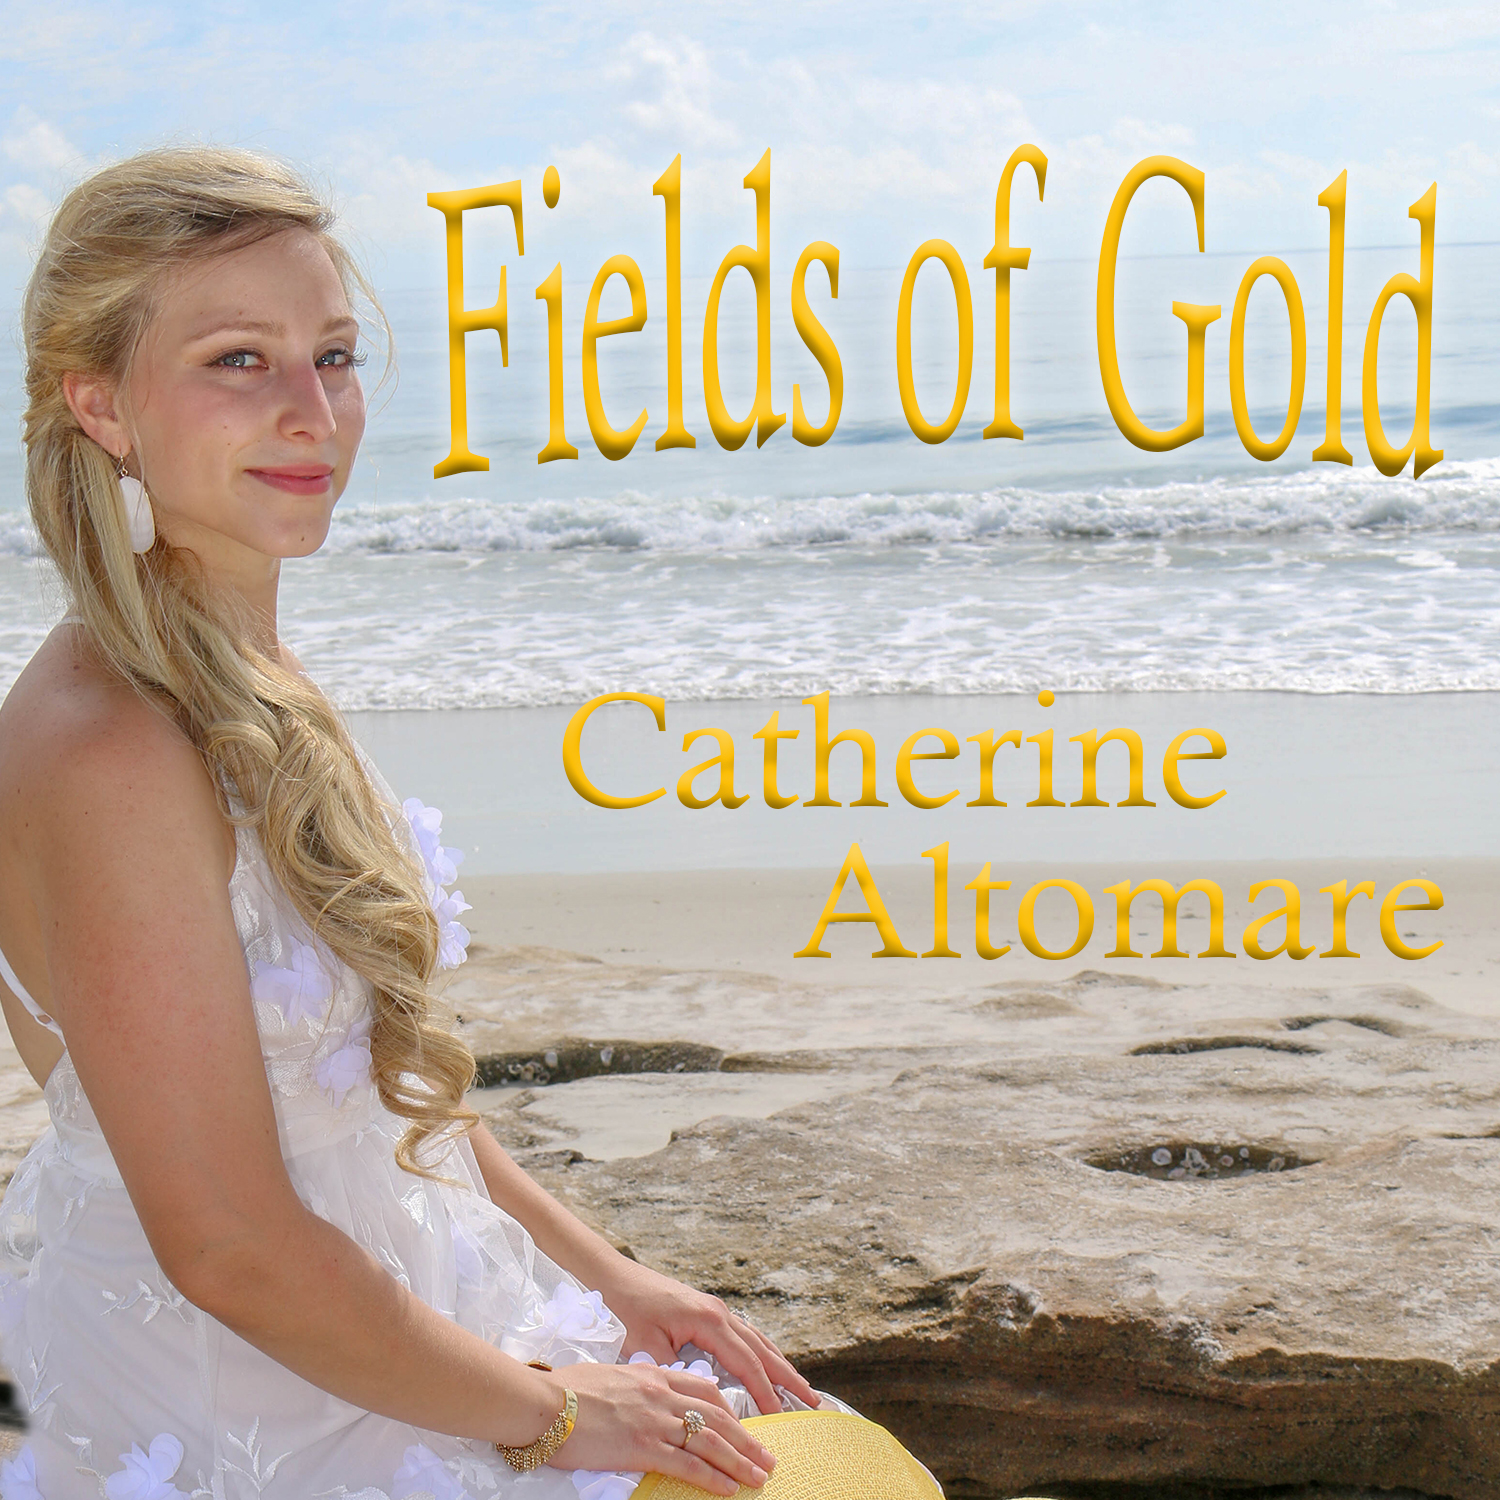 Catherine Altomare